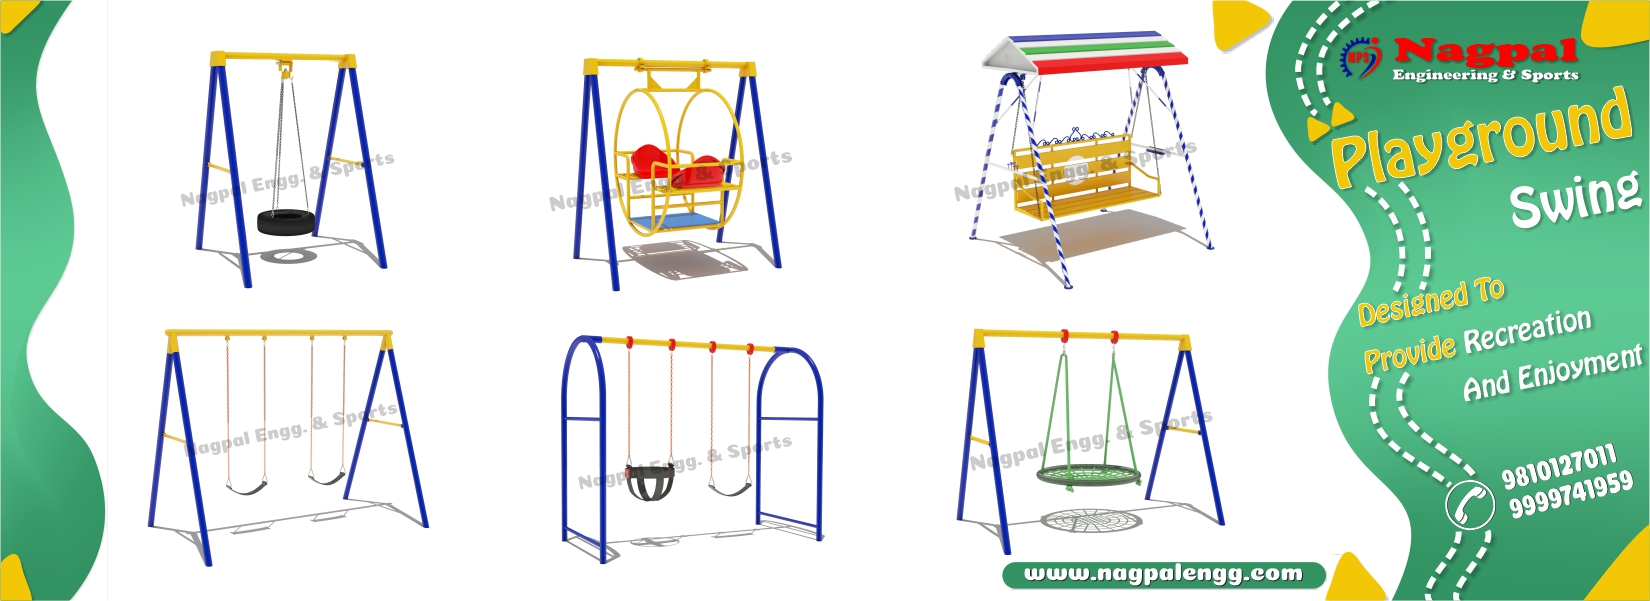 Multiplay Swing System